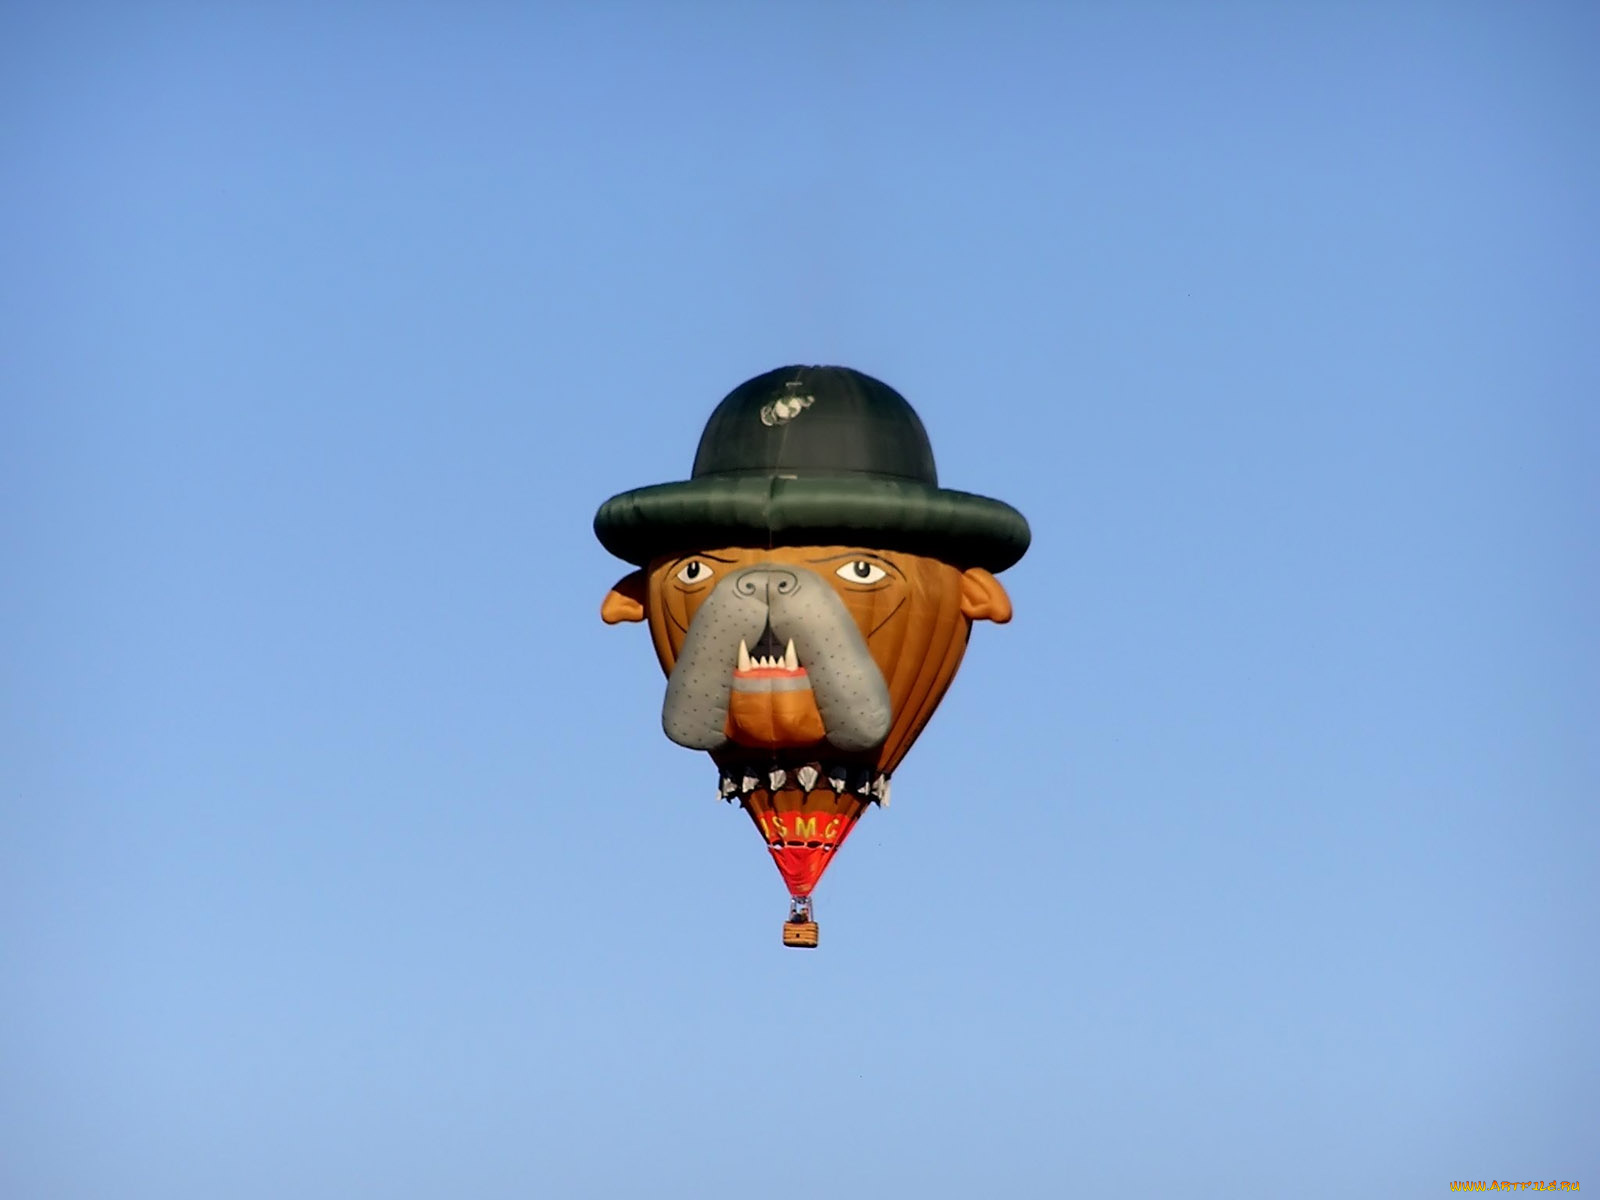 corn, palace, balloon, авиация, воздушные, шары